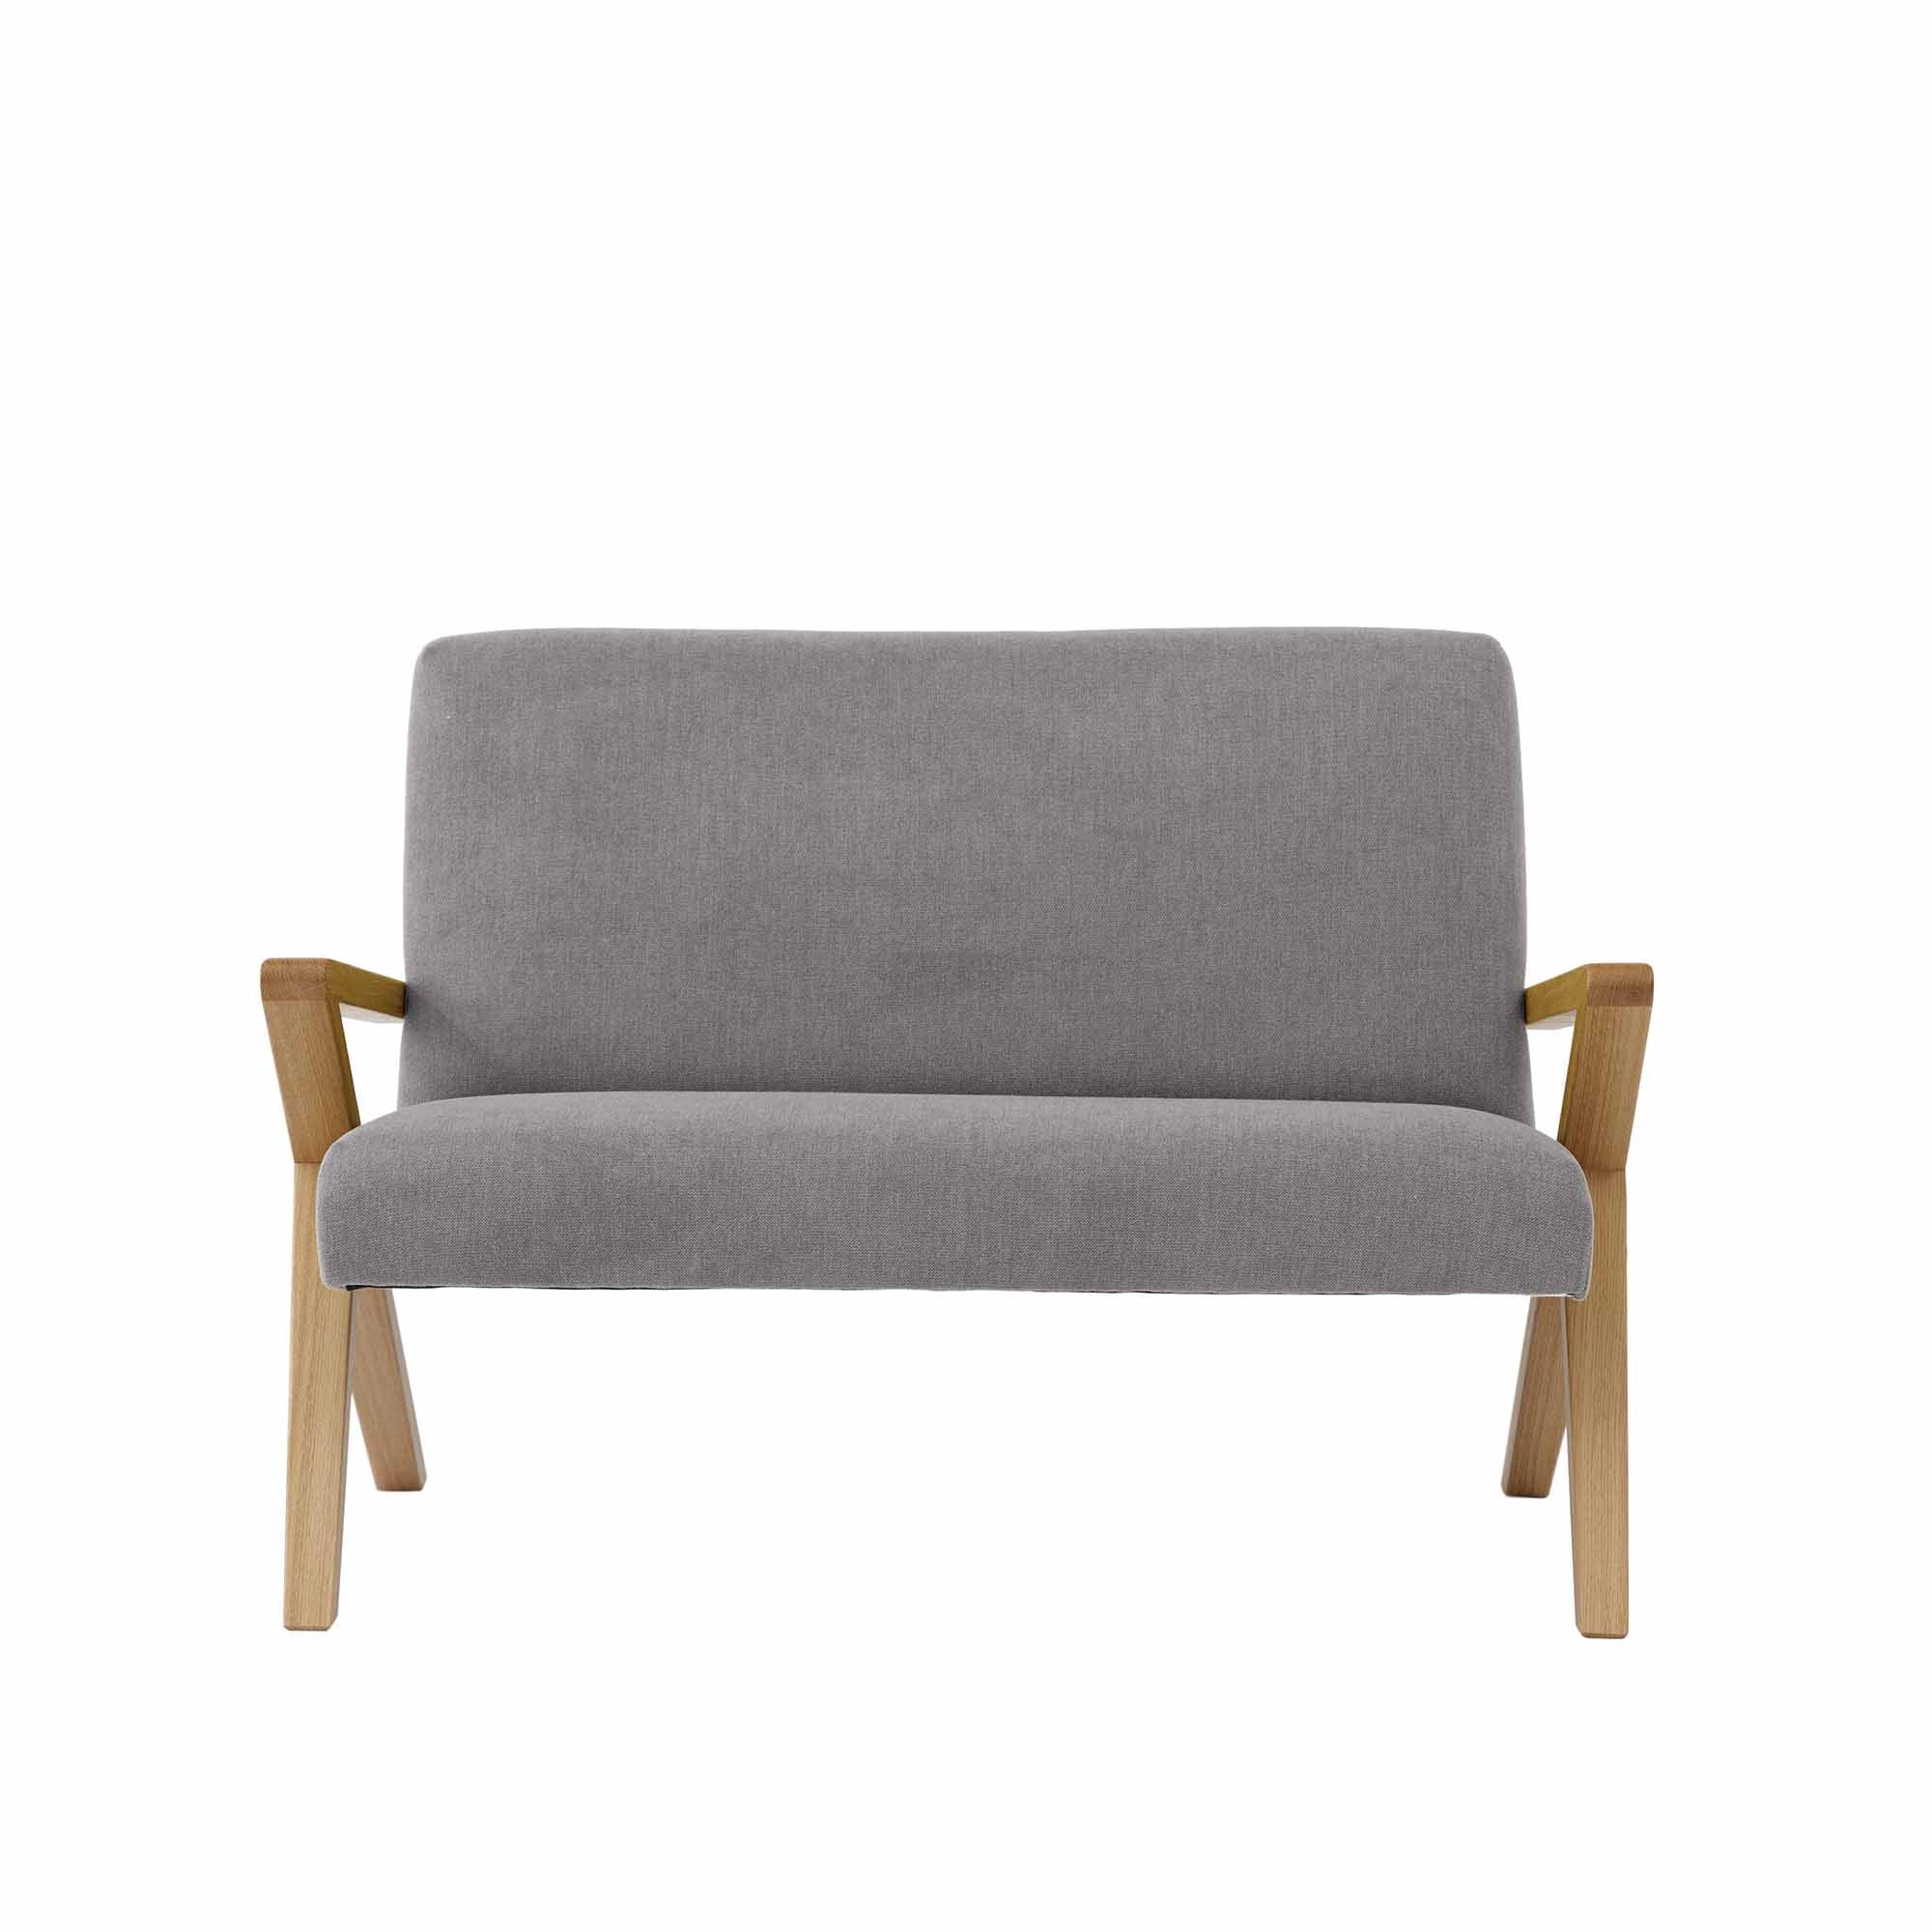 KIDS RETROSTAR 2-Seater Sofa, Oak Wood Frame, Natural grey fabric, front view